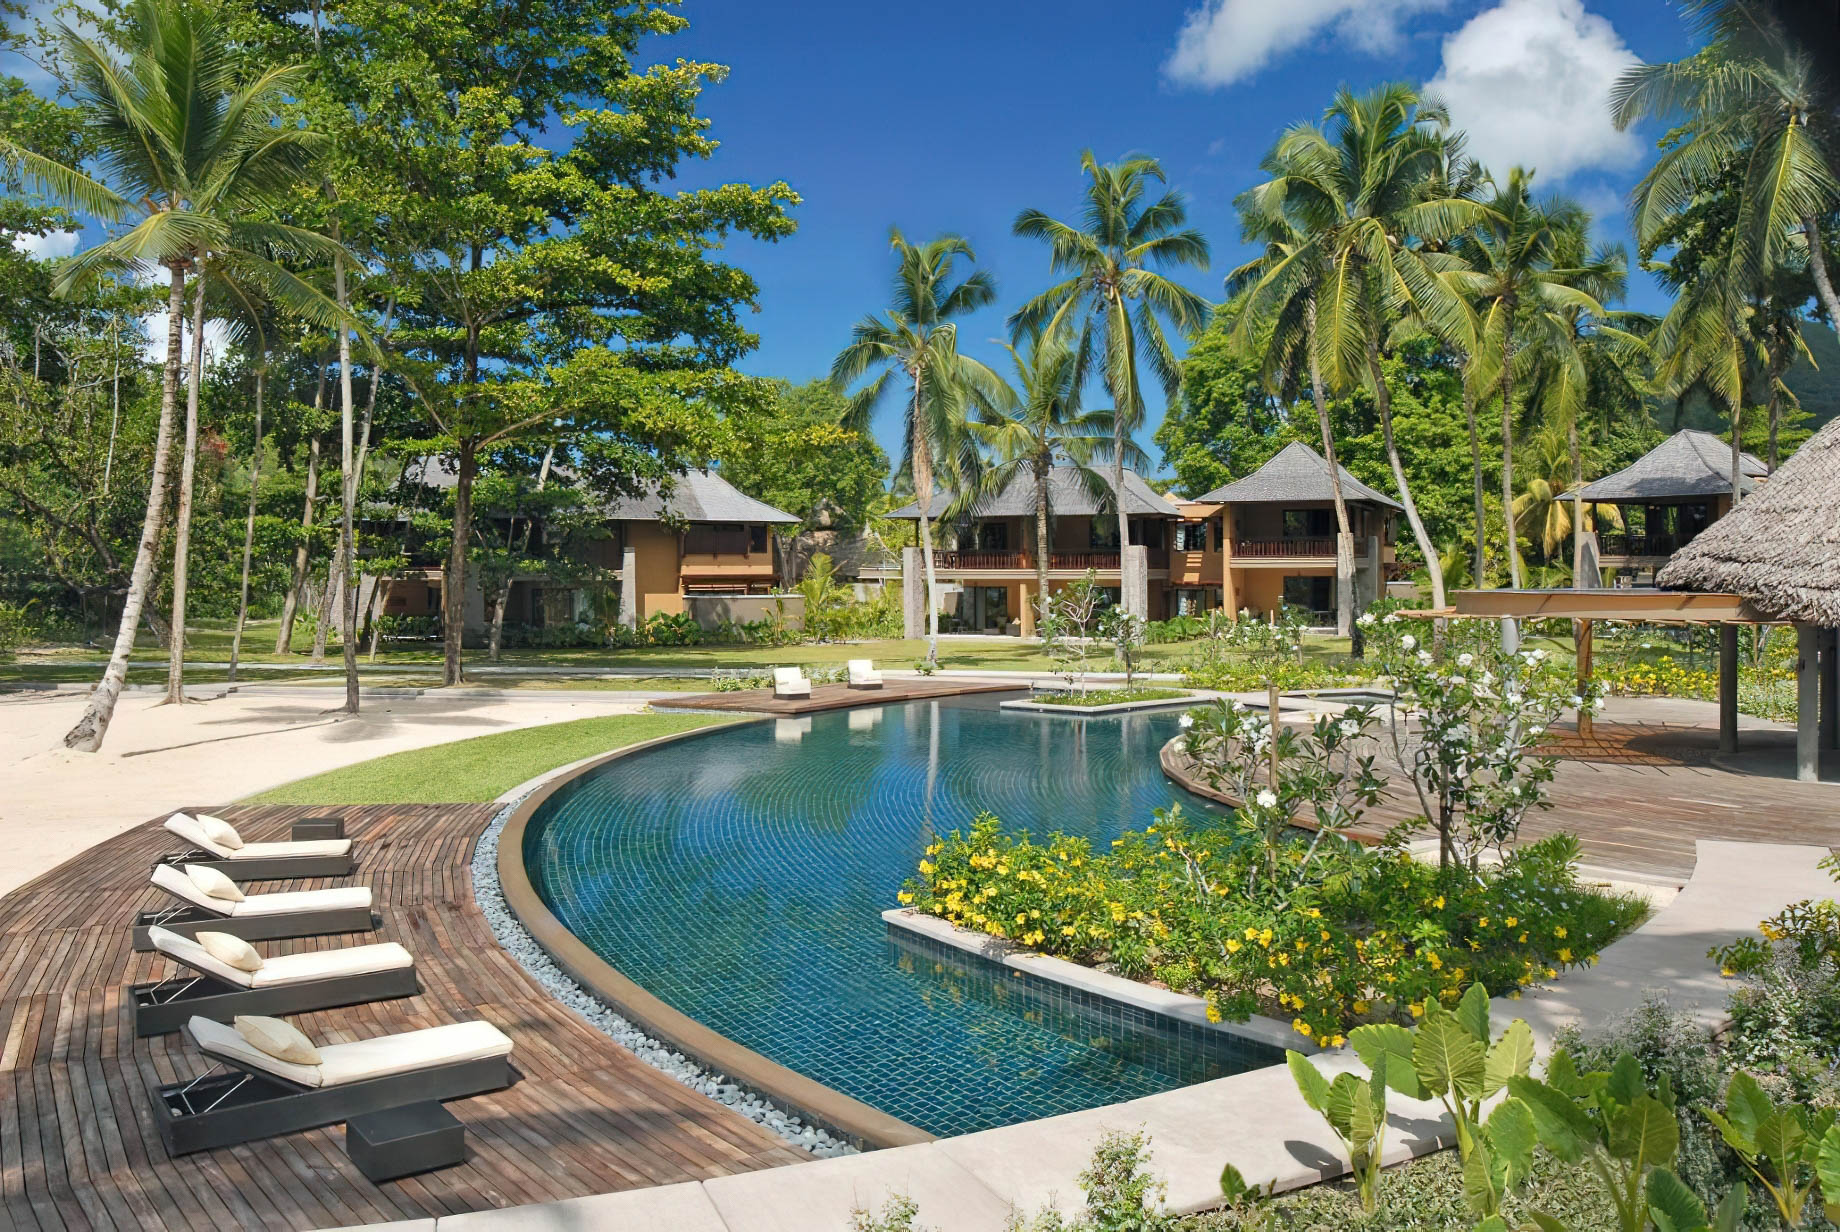 Constance Ephelia Resort - Port Launay, Mahe, Seychelles - Pool Deck